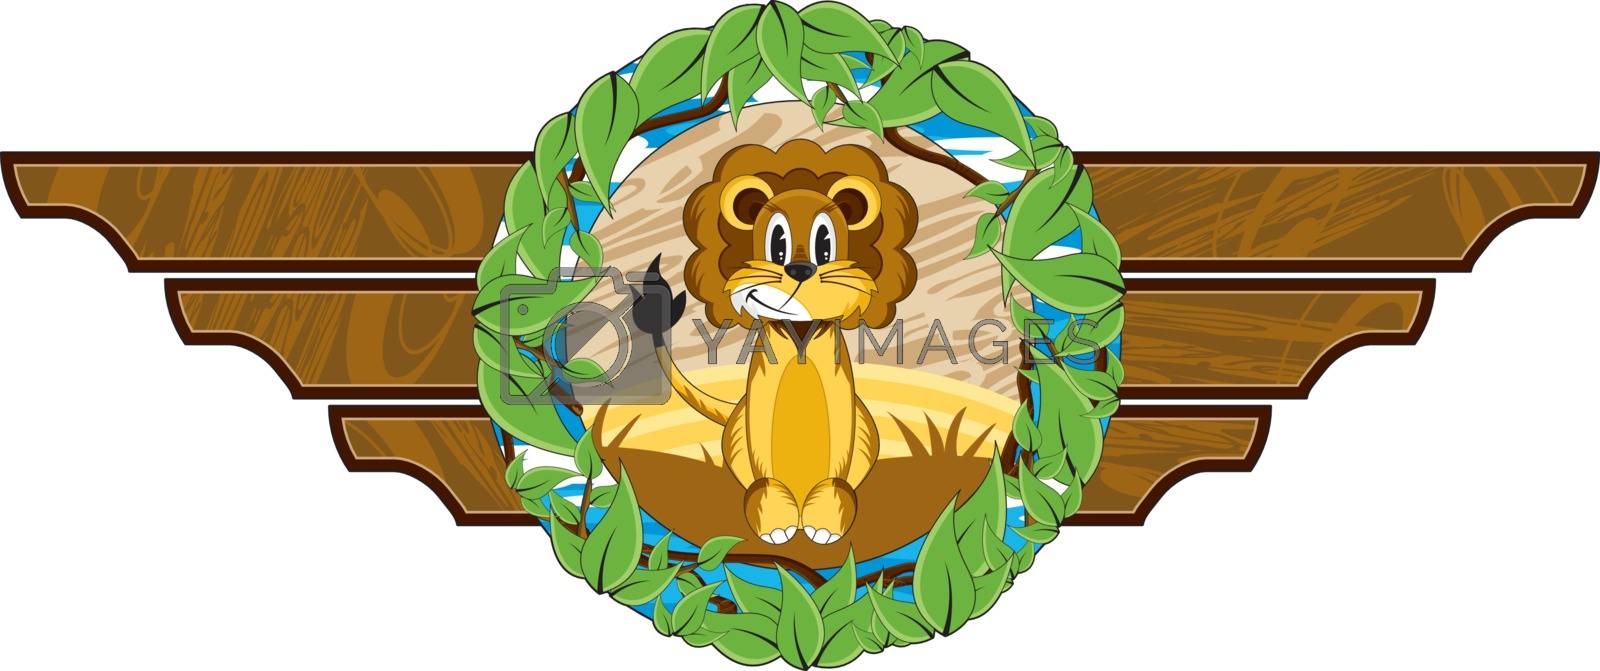 Royalty free image of Cute Cartoon Lion by markmurphycreative